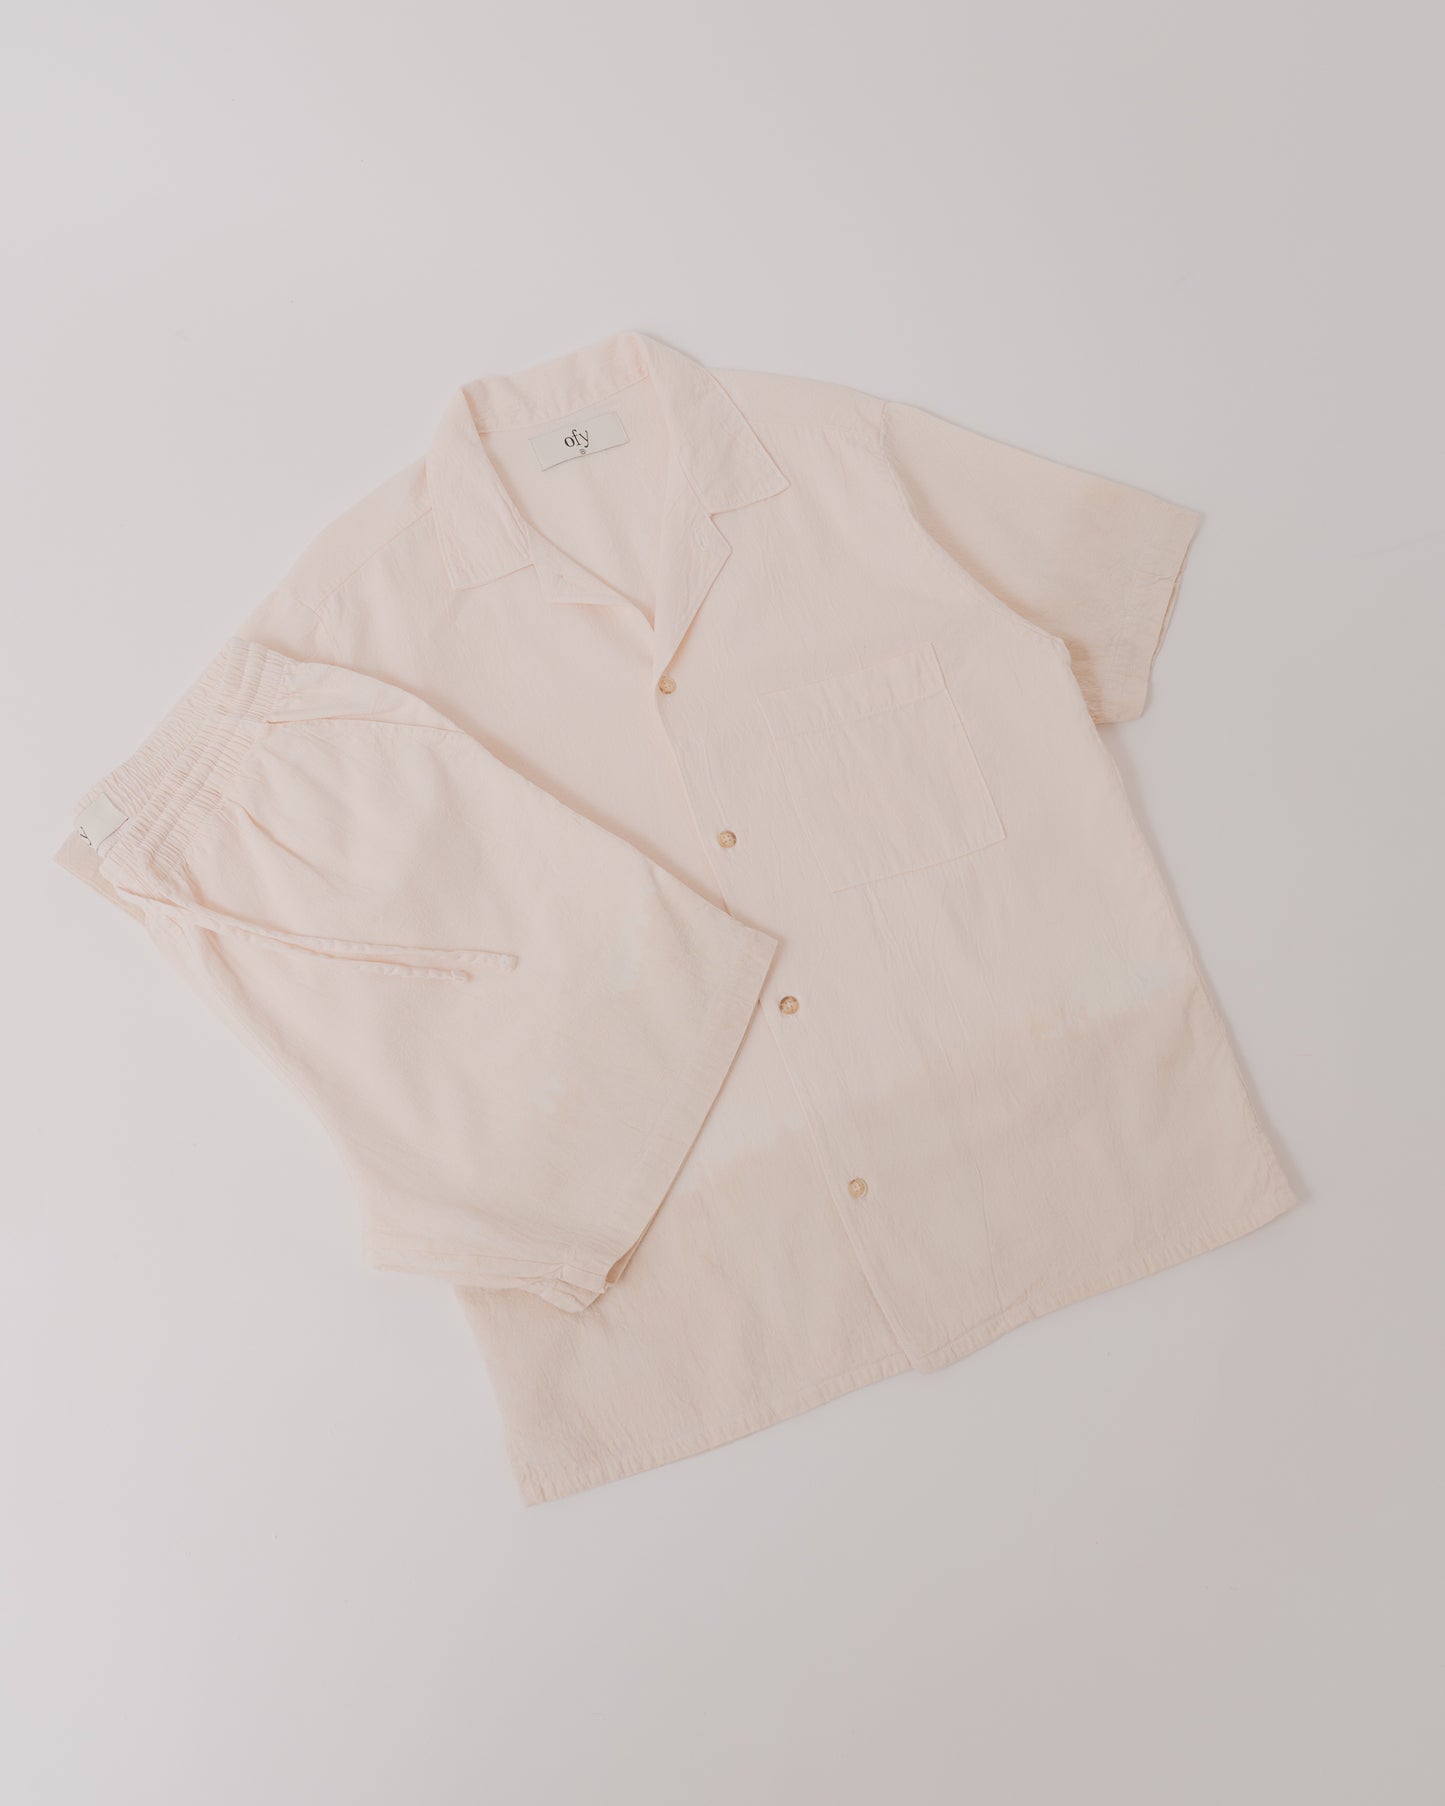 Horizon Crinkle S/S Shirt - Coconut Dip